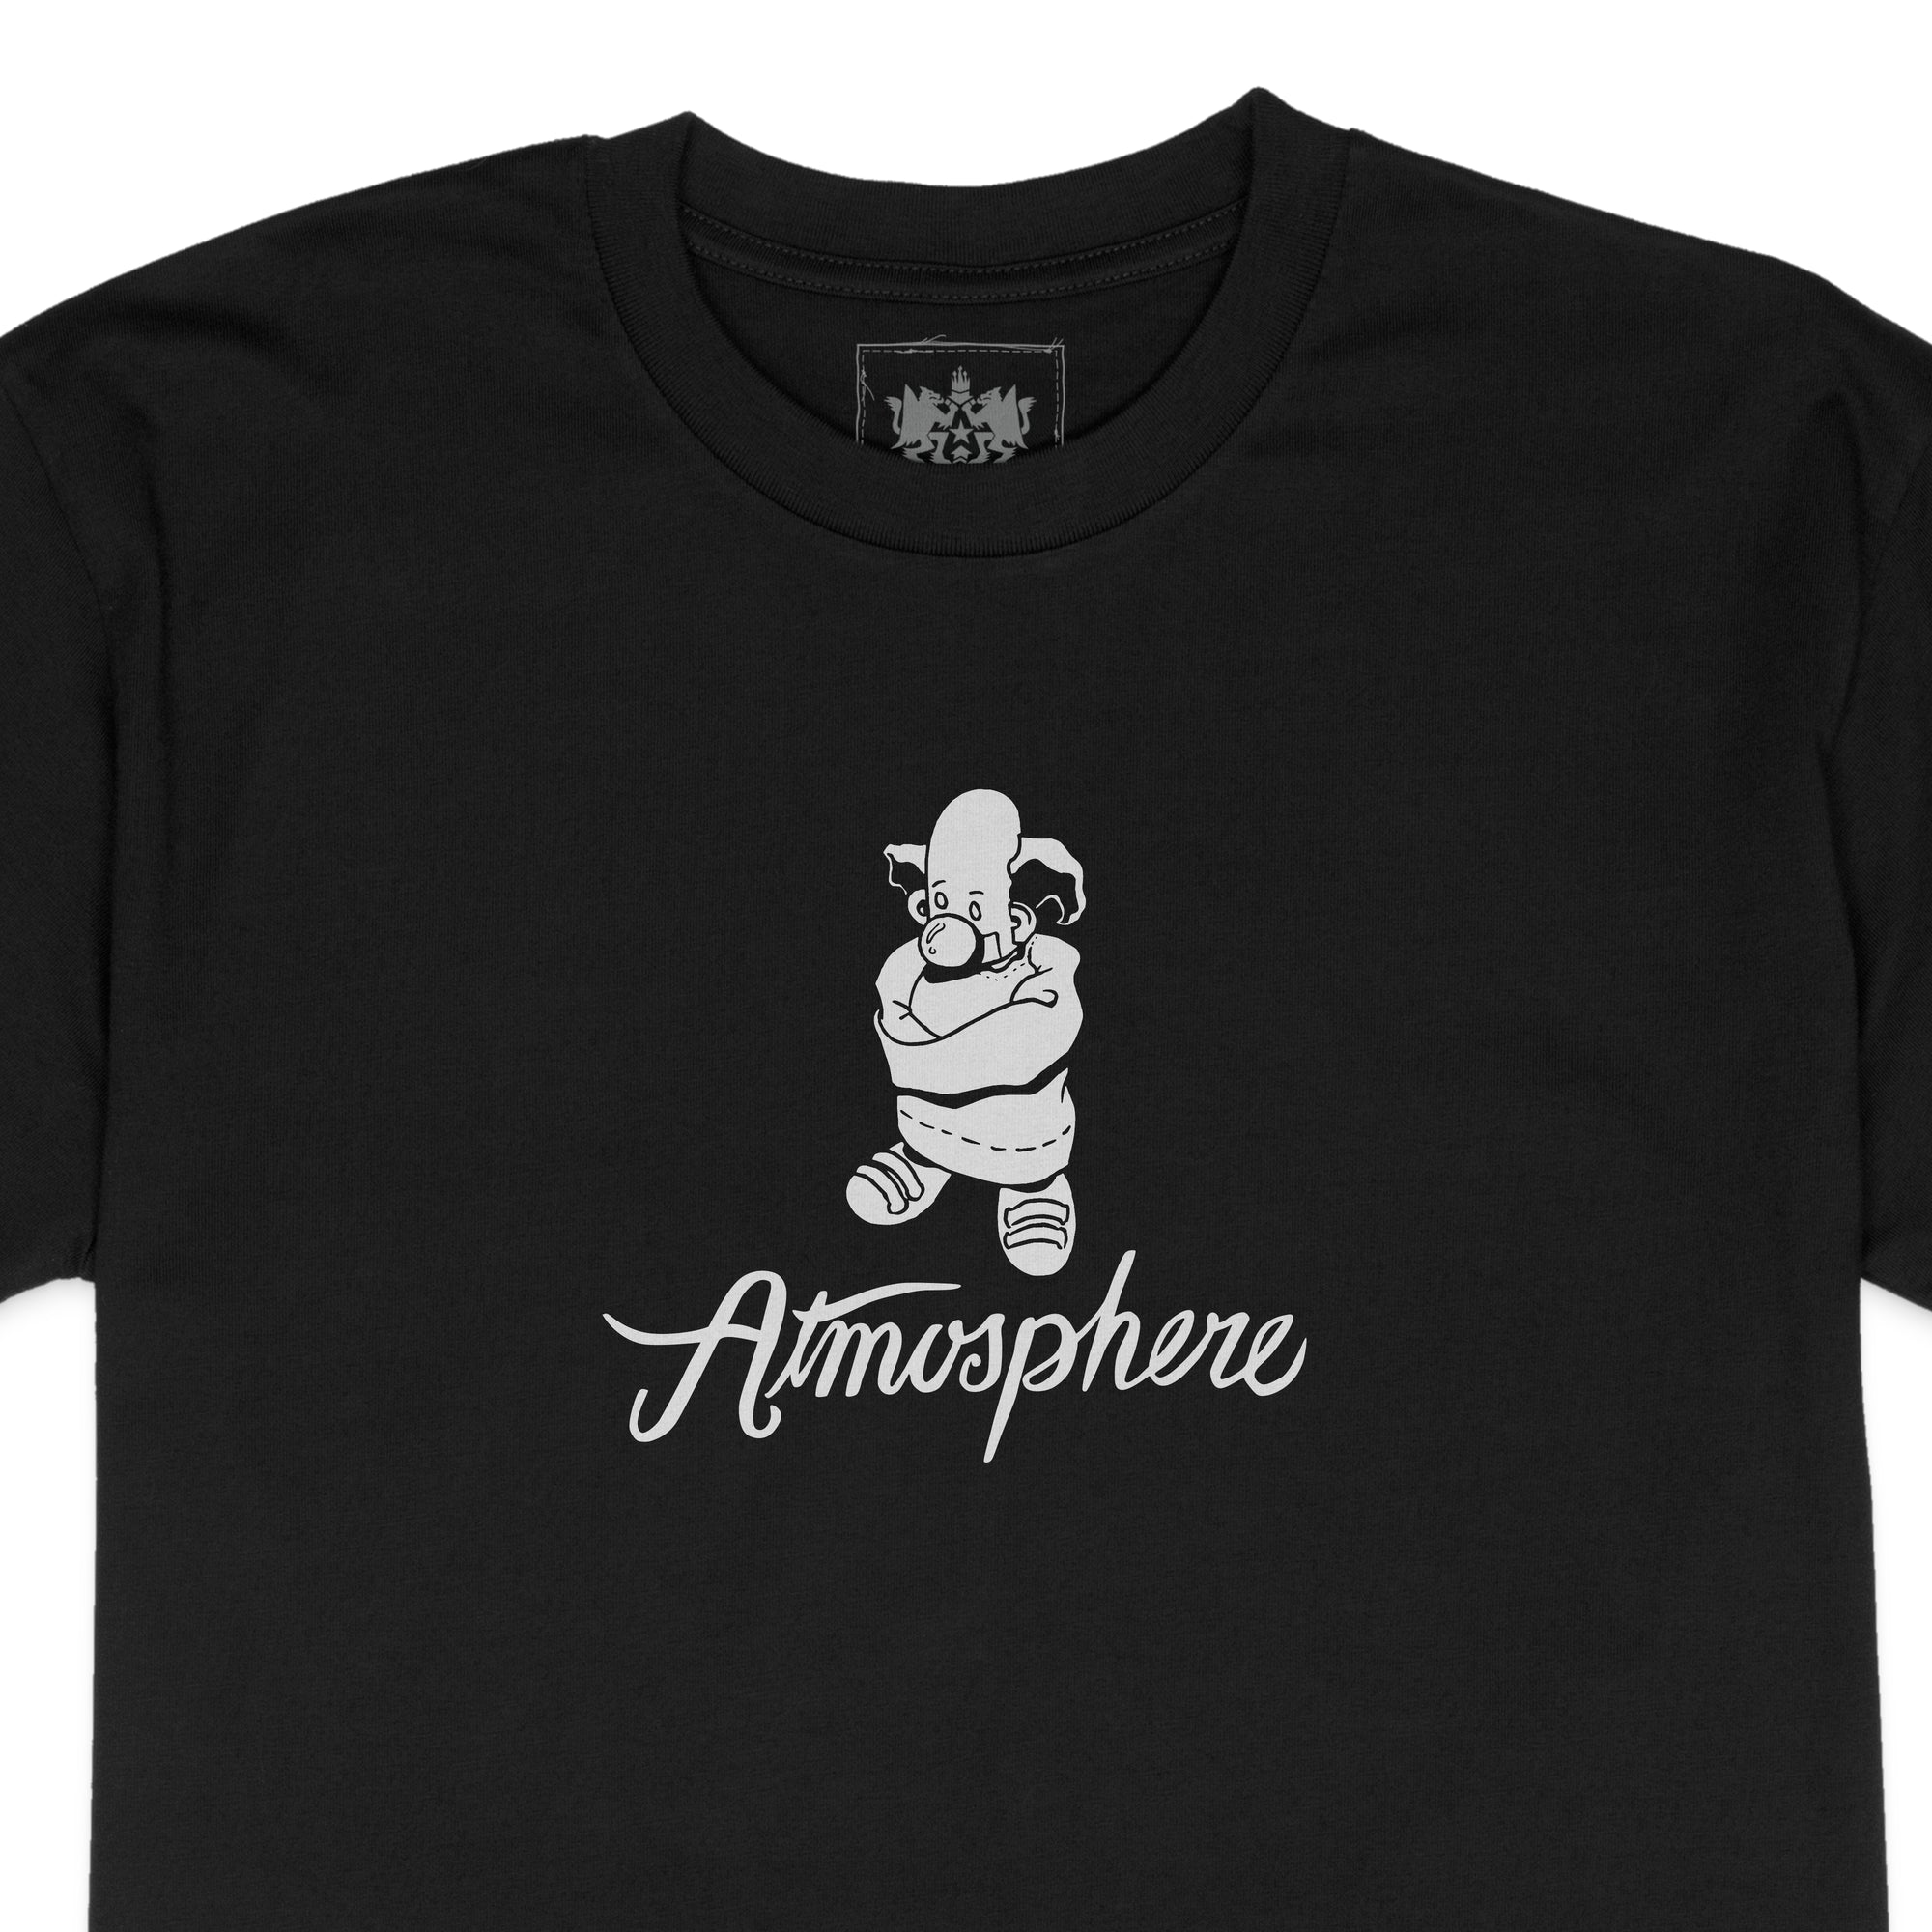 Atmosphere - Self Help Shirt